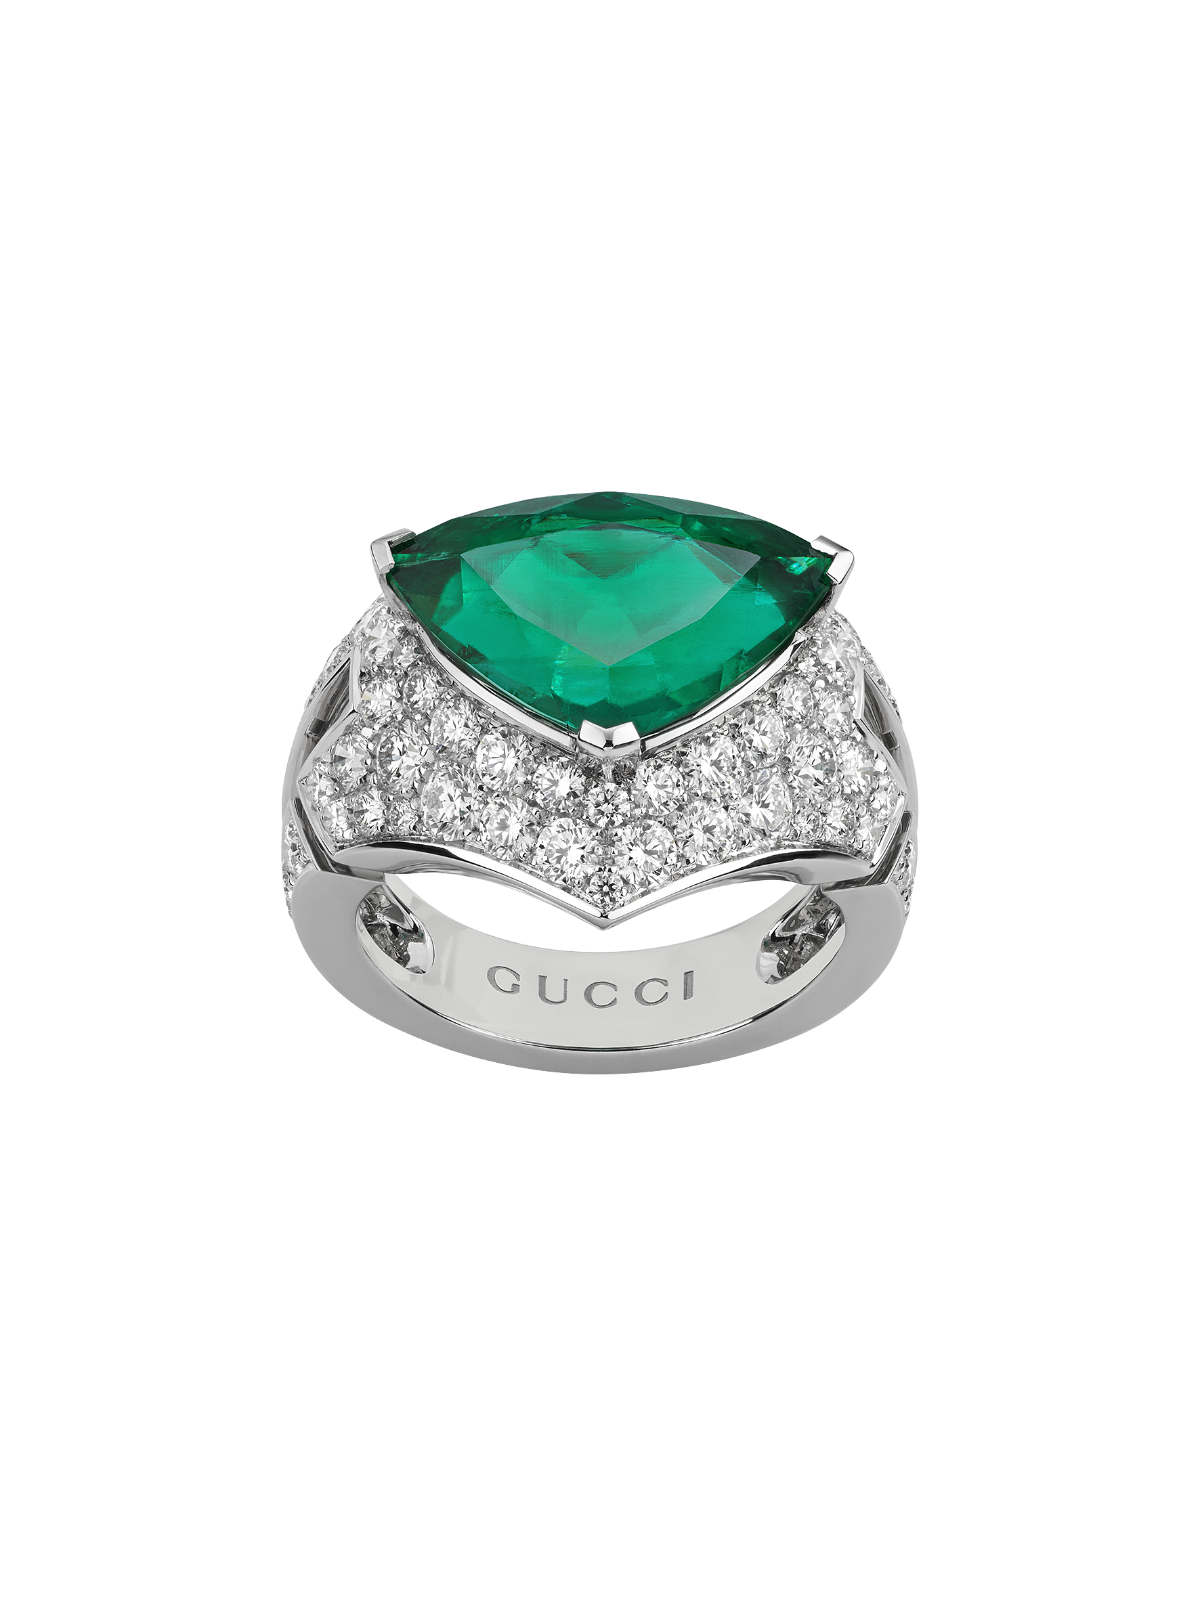 Gucci Presents Its New High Jewelry Collection: Labirinti Gucci